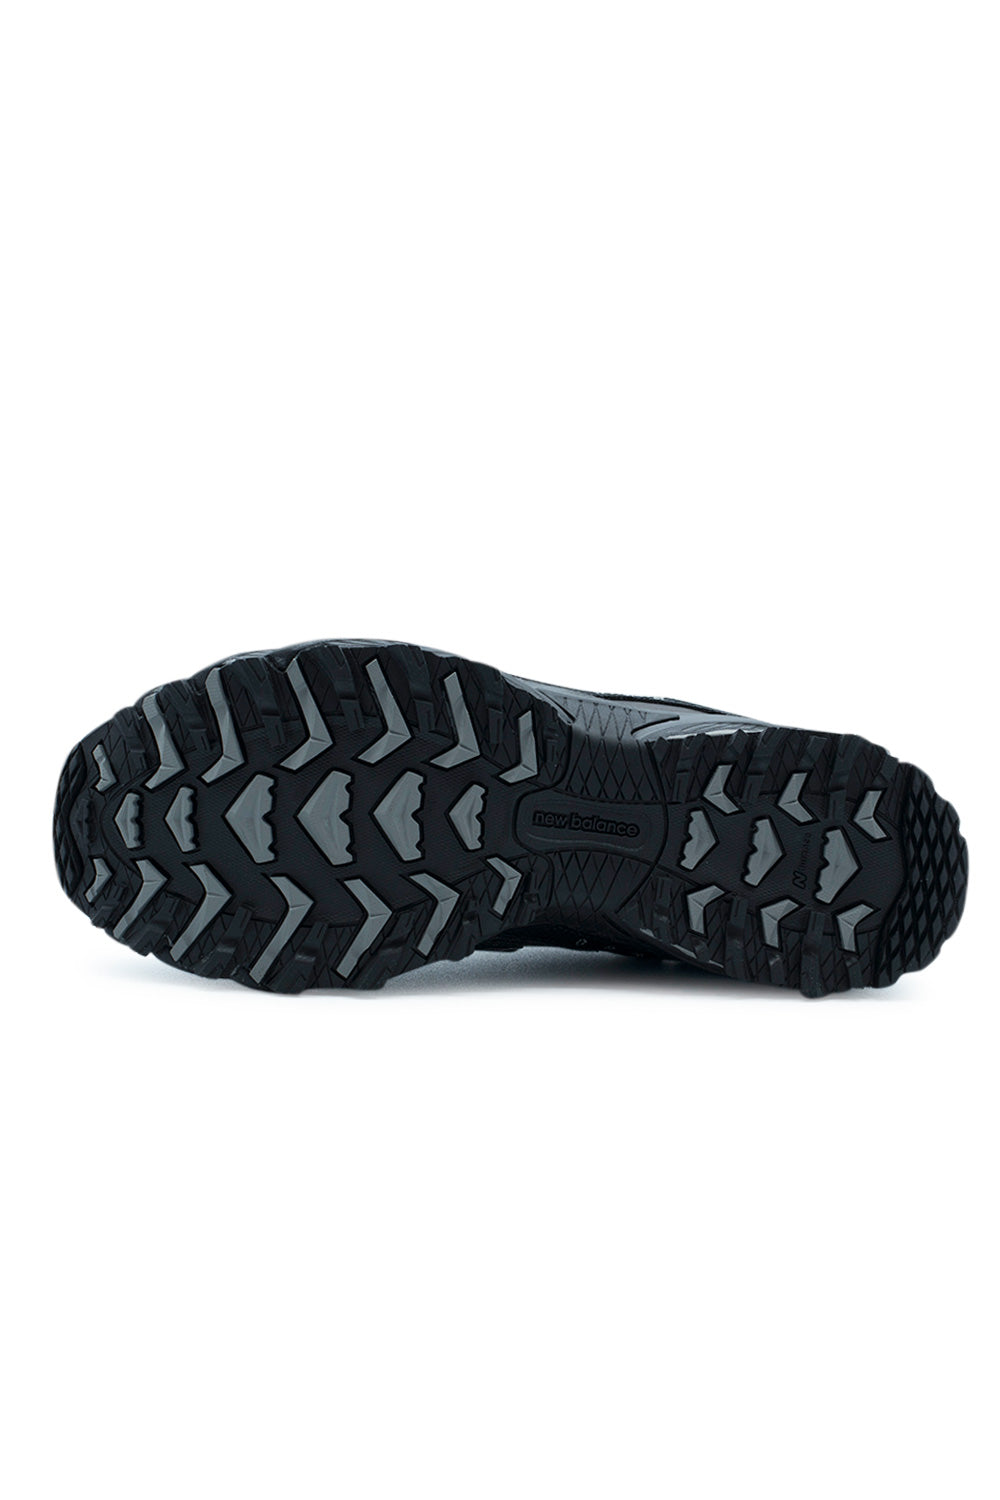 New Balance 610XV1 (GORE-TEX) Shoe Phantom / Magnet / Shadow Grey - BONKERS